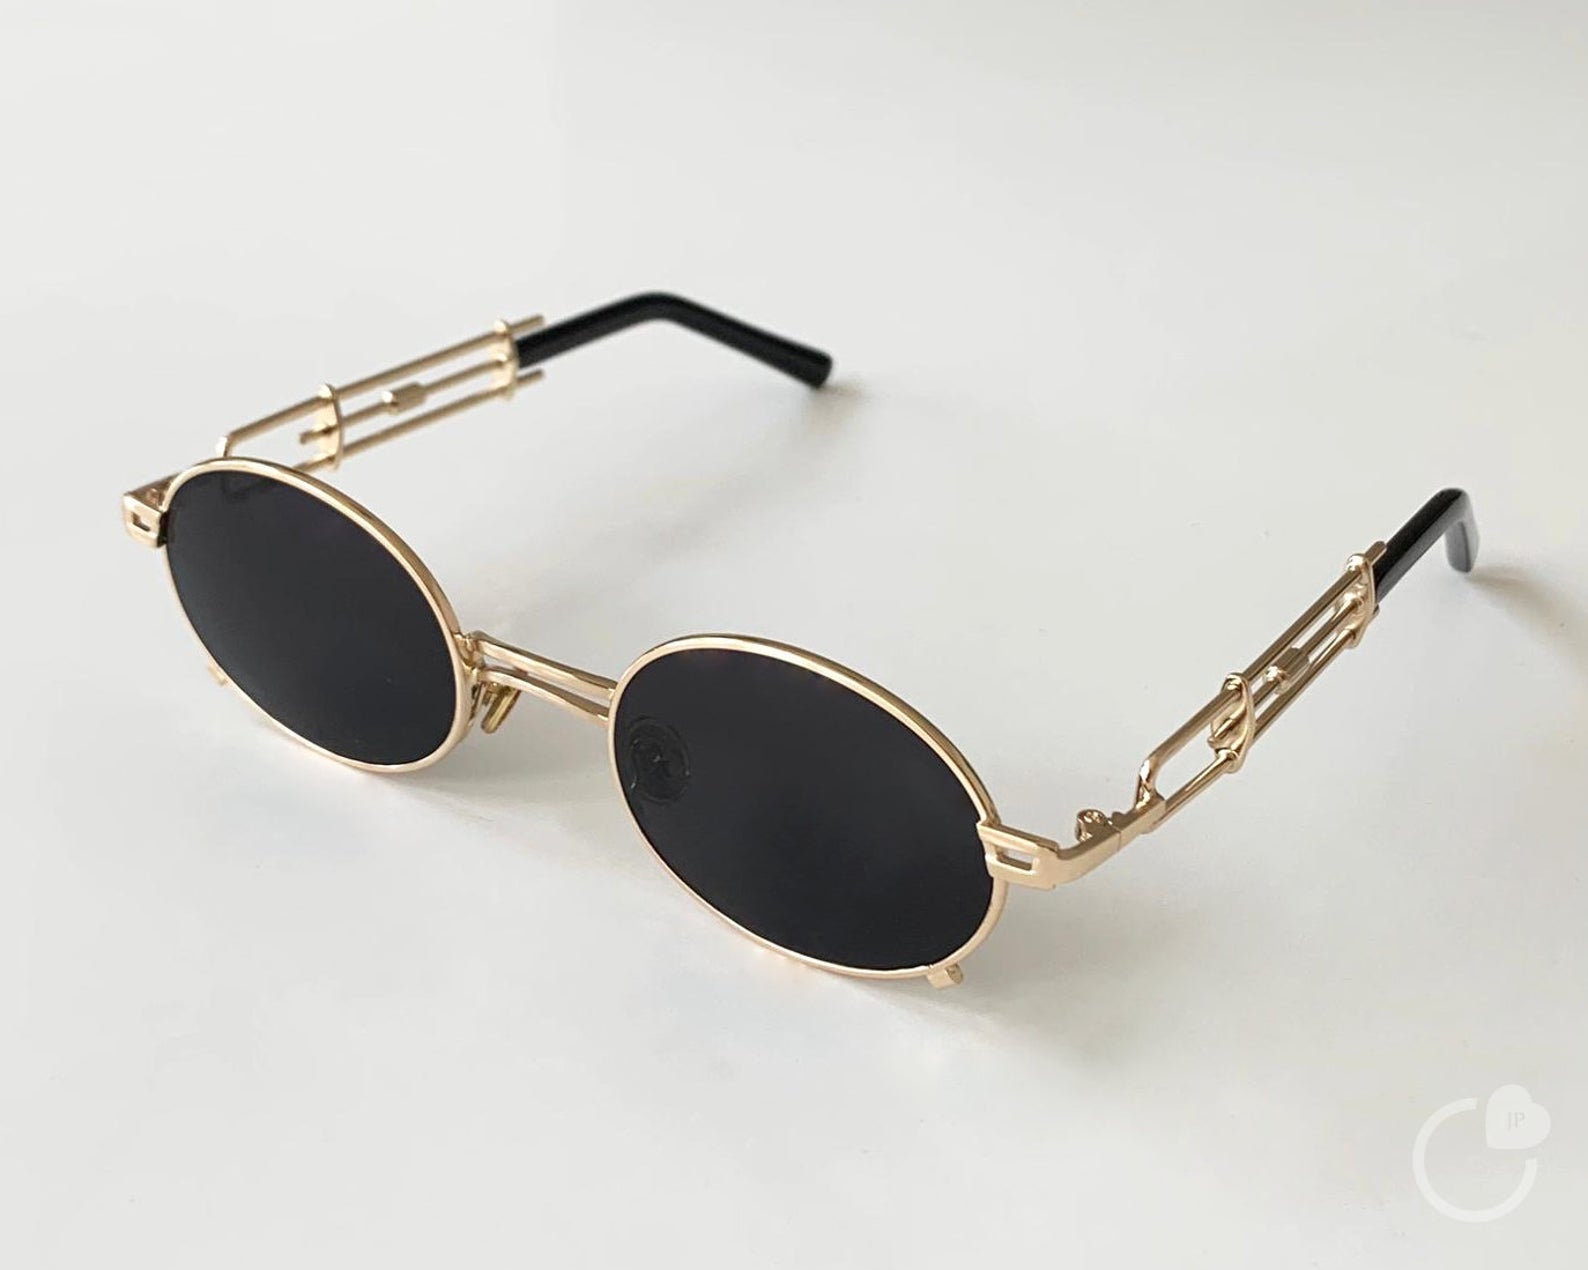 Justperfectco Vintage Gold Frame Oval Sunglasses